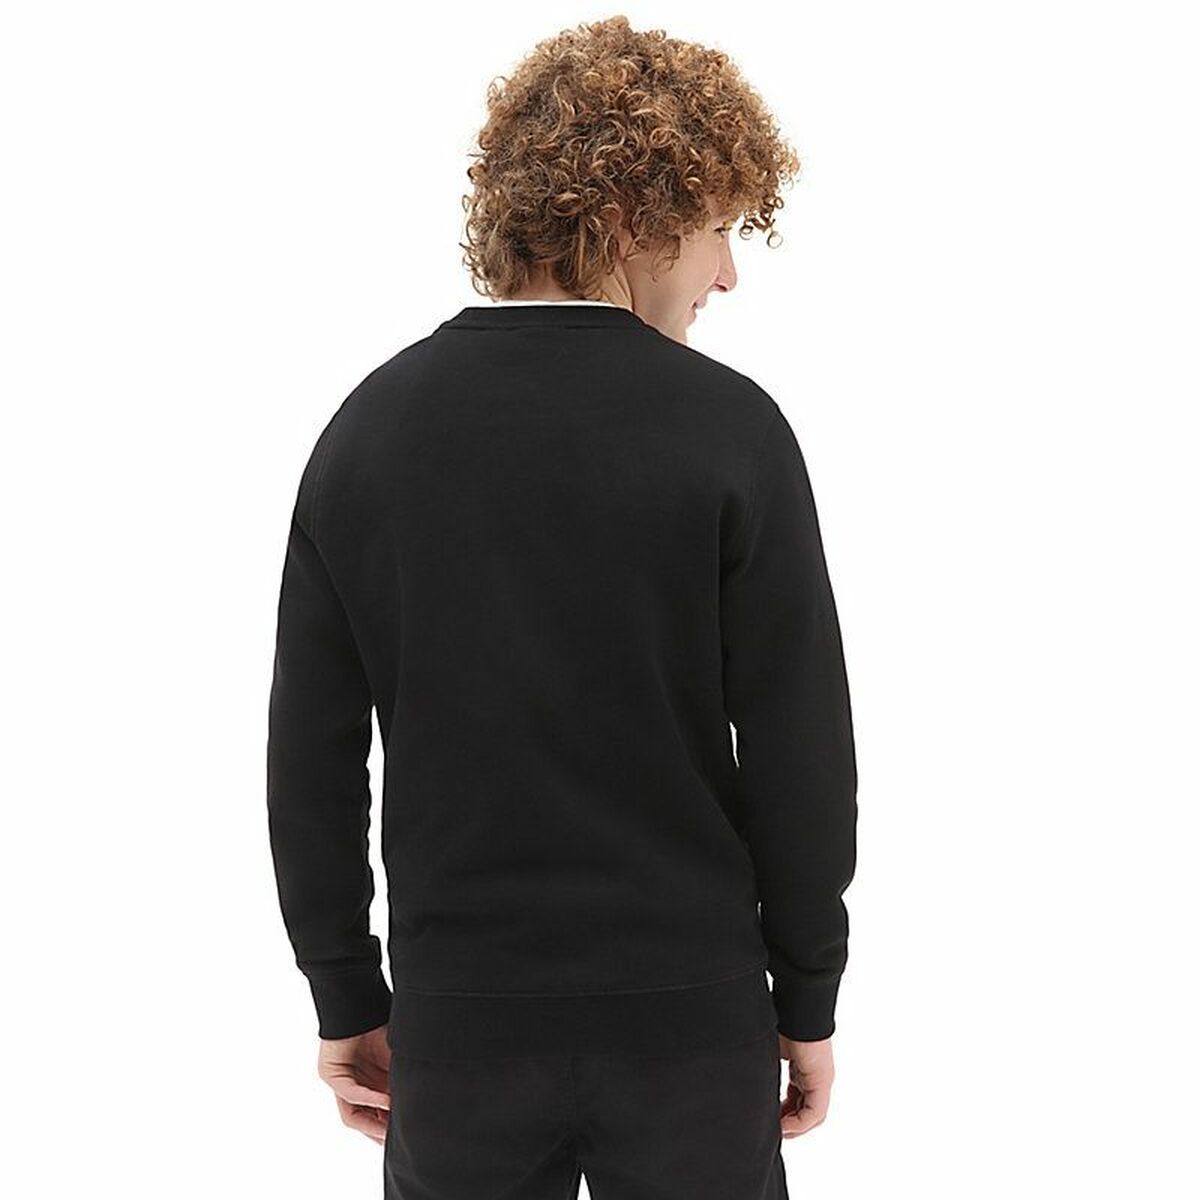 Kaufe Herren Sweater ohne Kapuze Vans Off The Wall Schwarz bei AWK Flagship um € 59.00